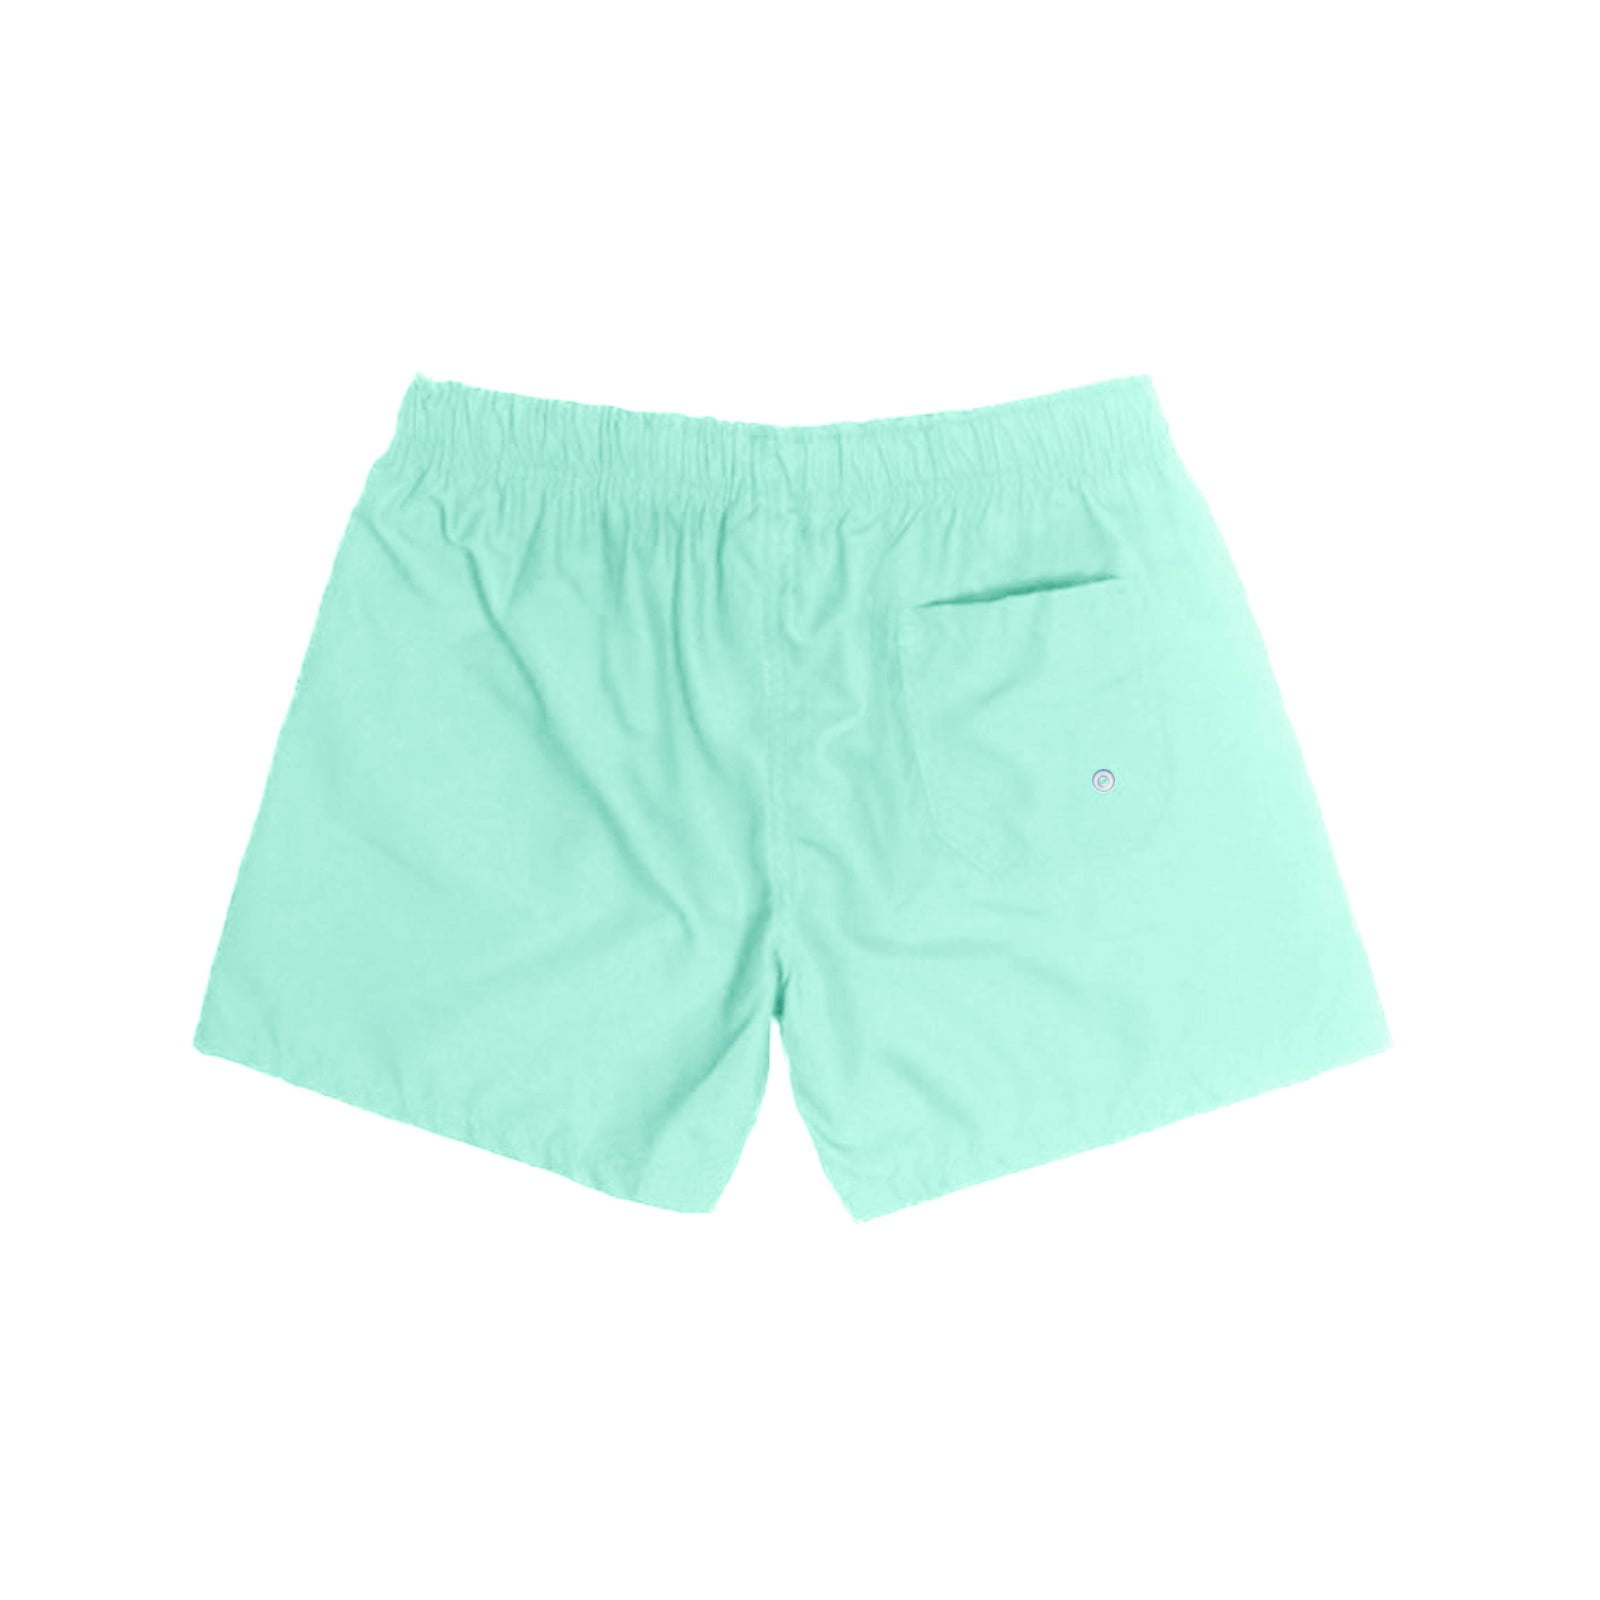 Men's Swim Trunks Quick Dry Beach Shorts Board Shorts Solid Mint Green ...